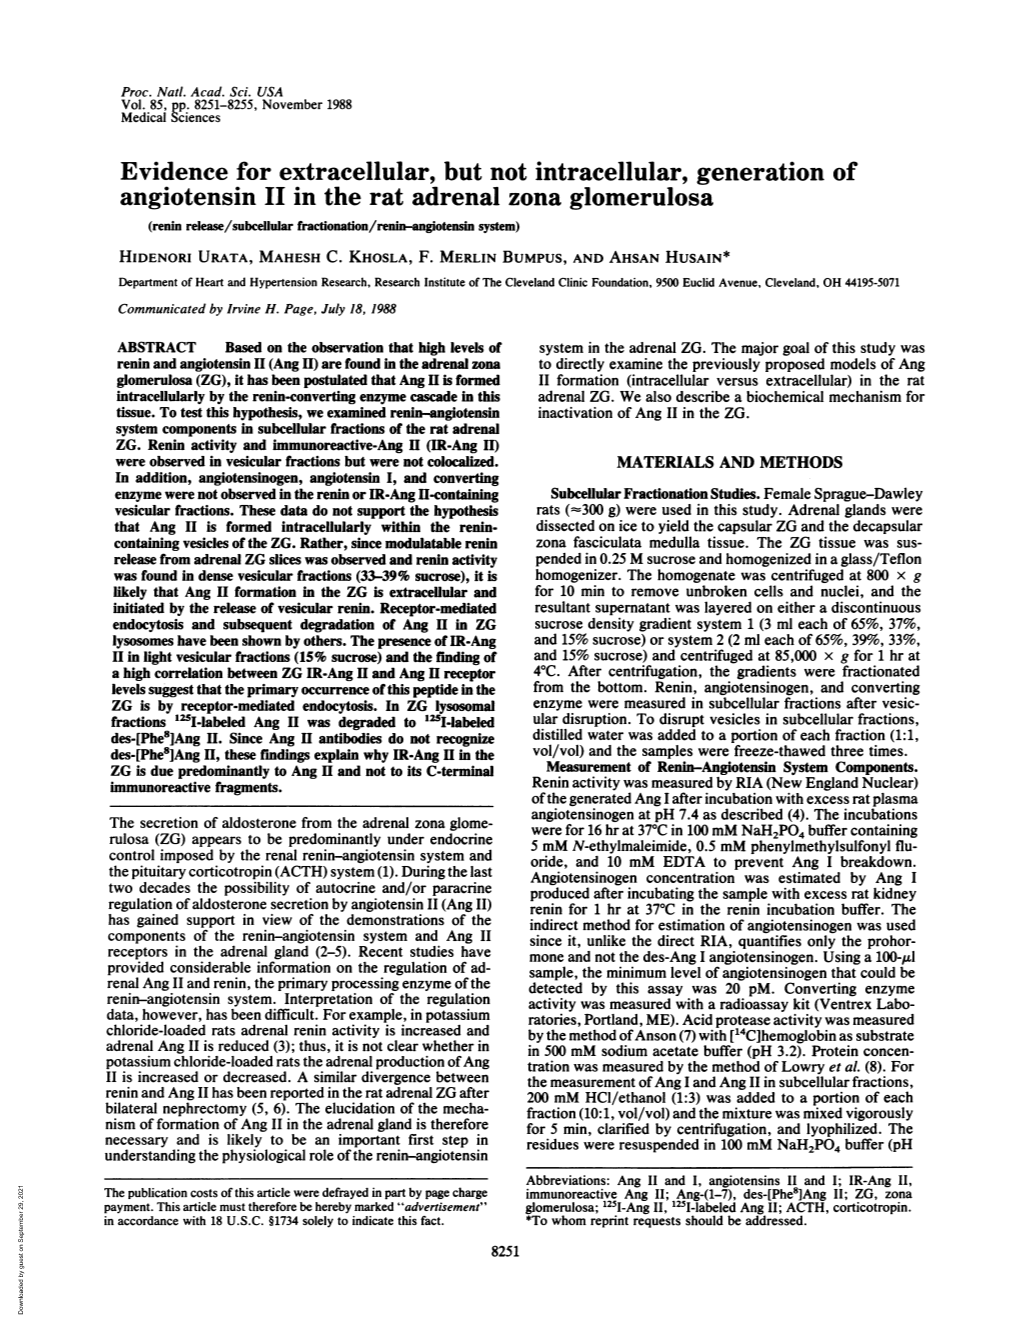 Angiotensin II in the Rat Adrenal Zona Glomerulosa (Renin Release/Subceilular Fractionation/Renin-Angiotensin System) HIDENORI URATA, MAHESH C